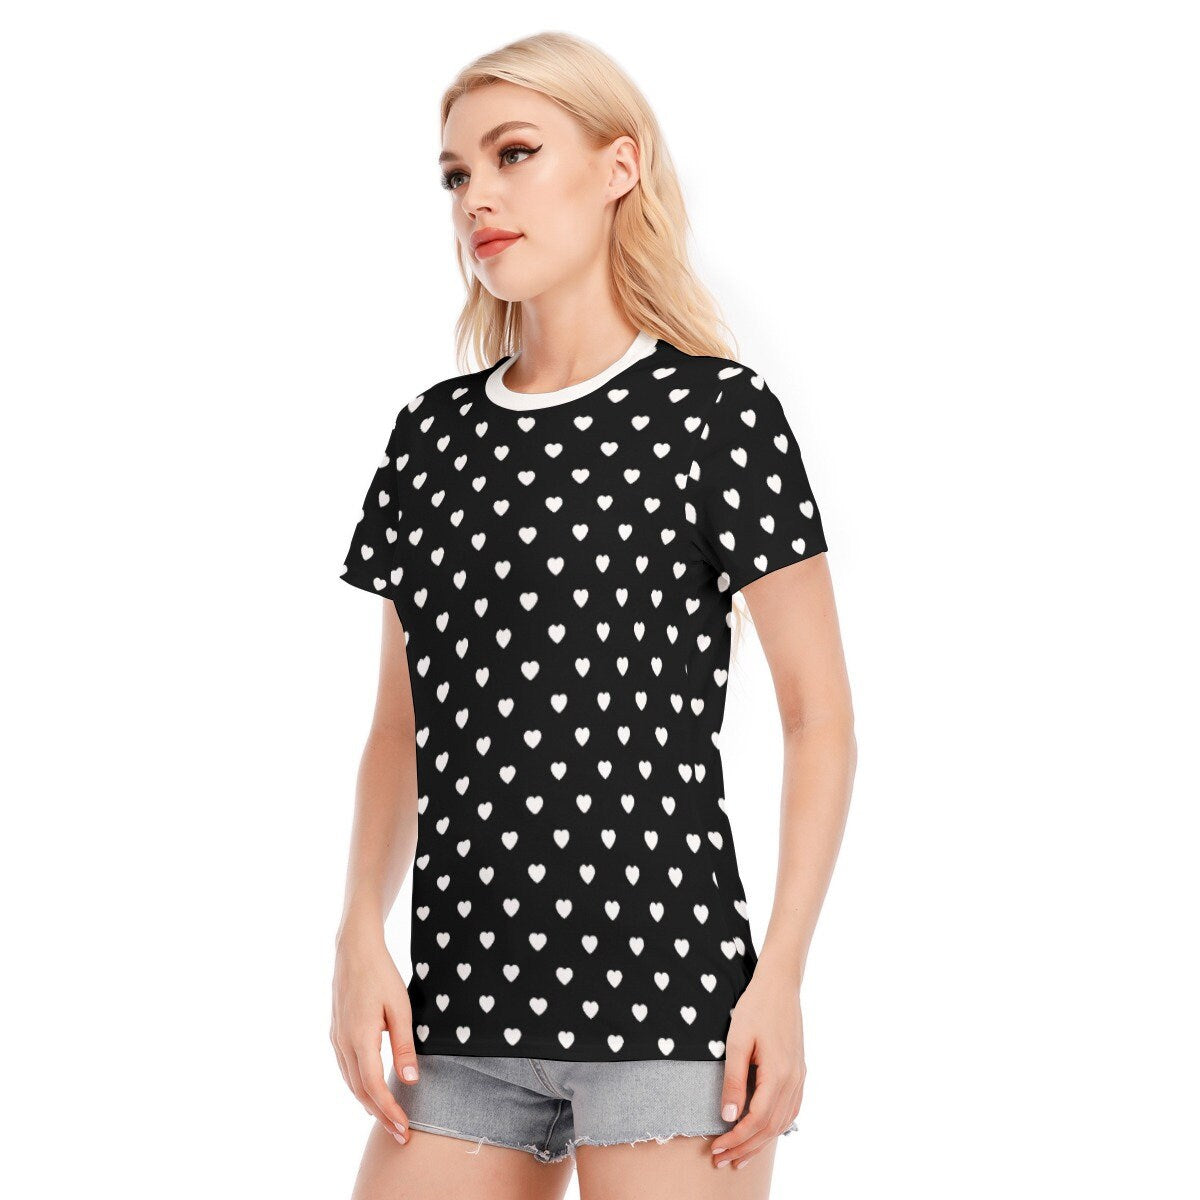 Womens T-shirt, Heart Polka Dot Top,Polka Dot Tshirt, Black Polka Dot Top, Retro T-shirt, Heart Print T-shirt, Heart Pattern T-shirt